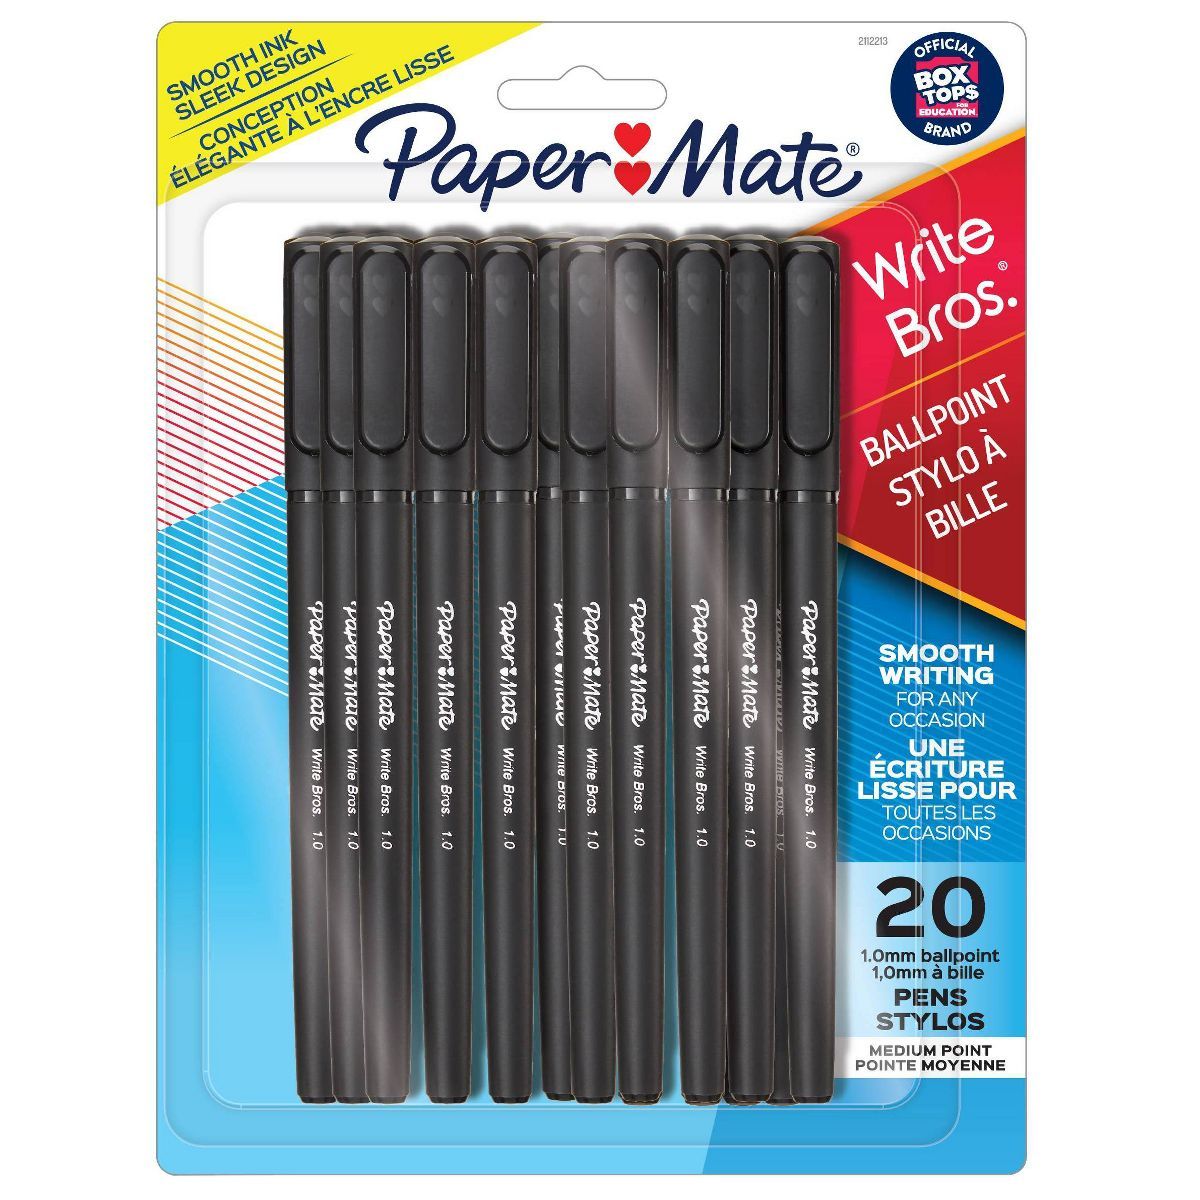 Paper Mate Write Bros. 20pk Ballpoint Pens 1.00mm Medium Tip Black | Target